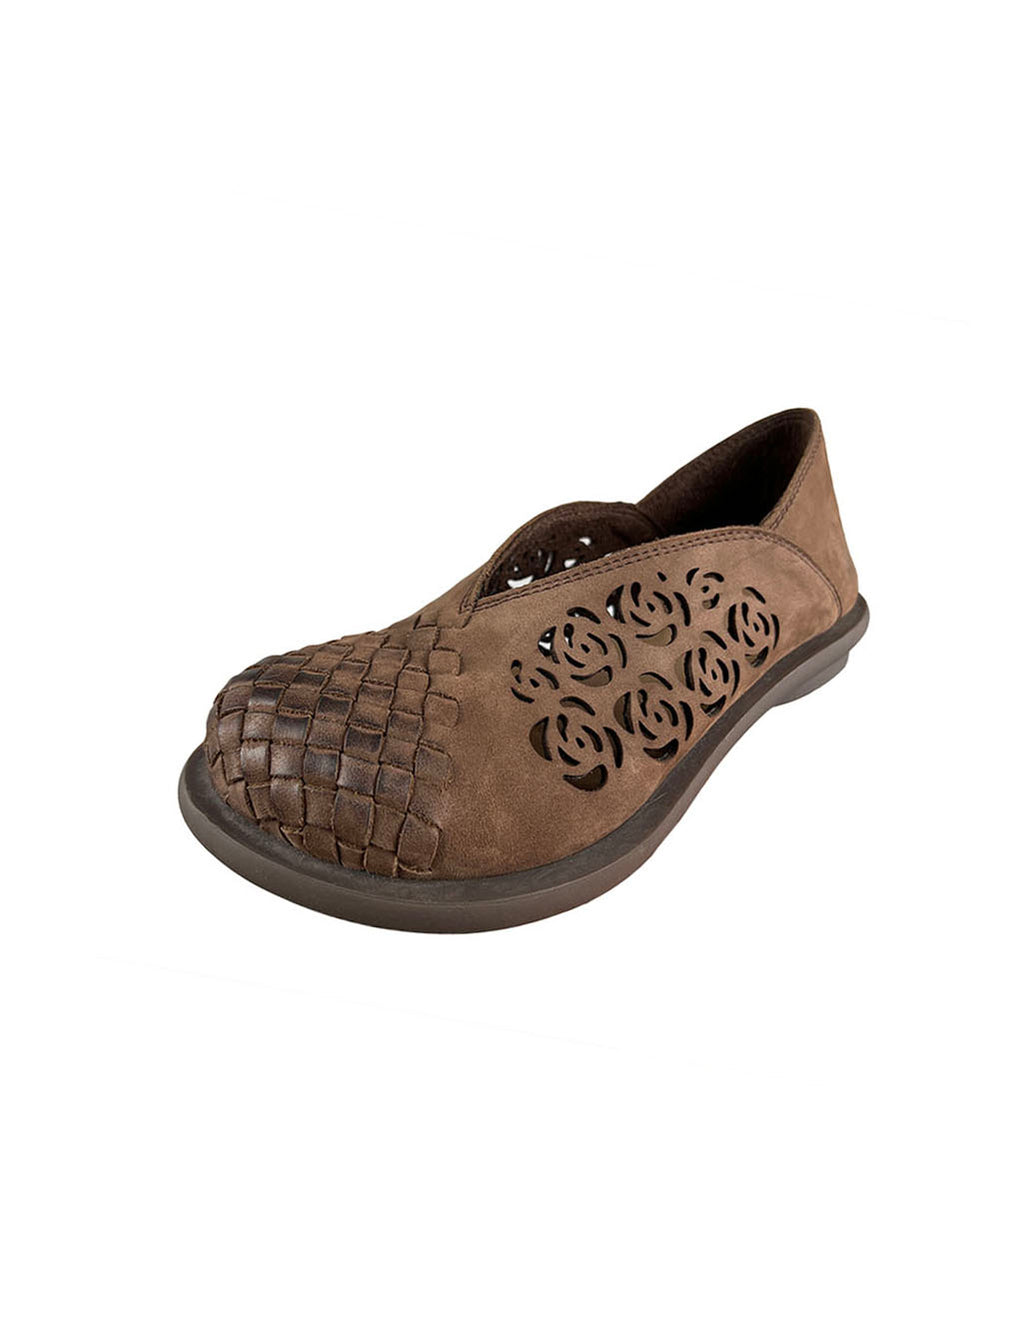 Women's Summer Sandals & Wedge Sandals — Obiono